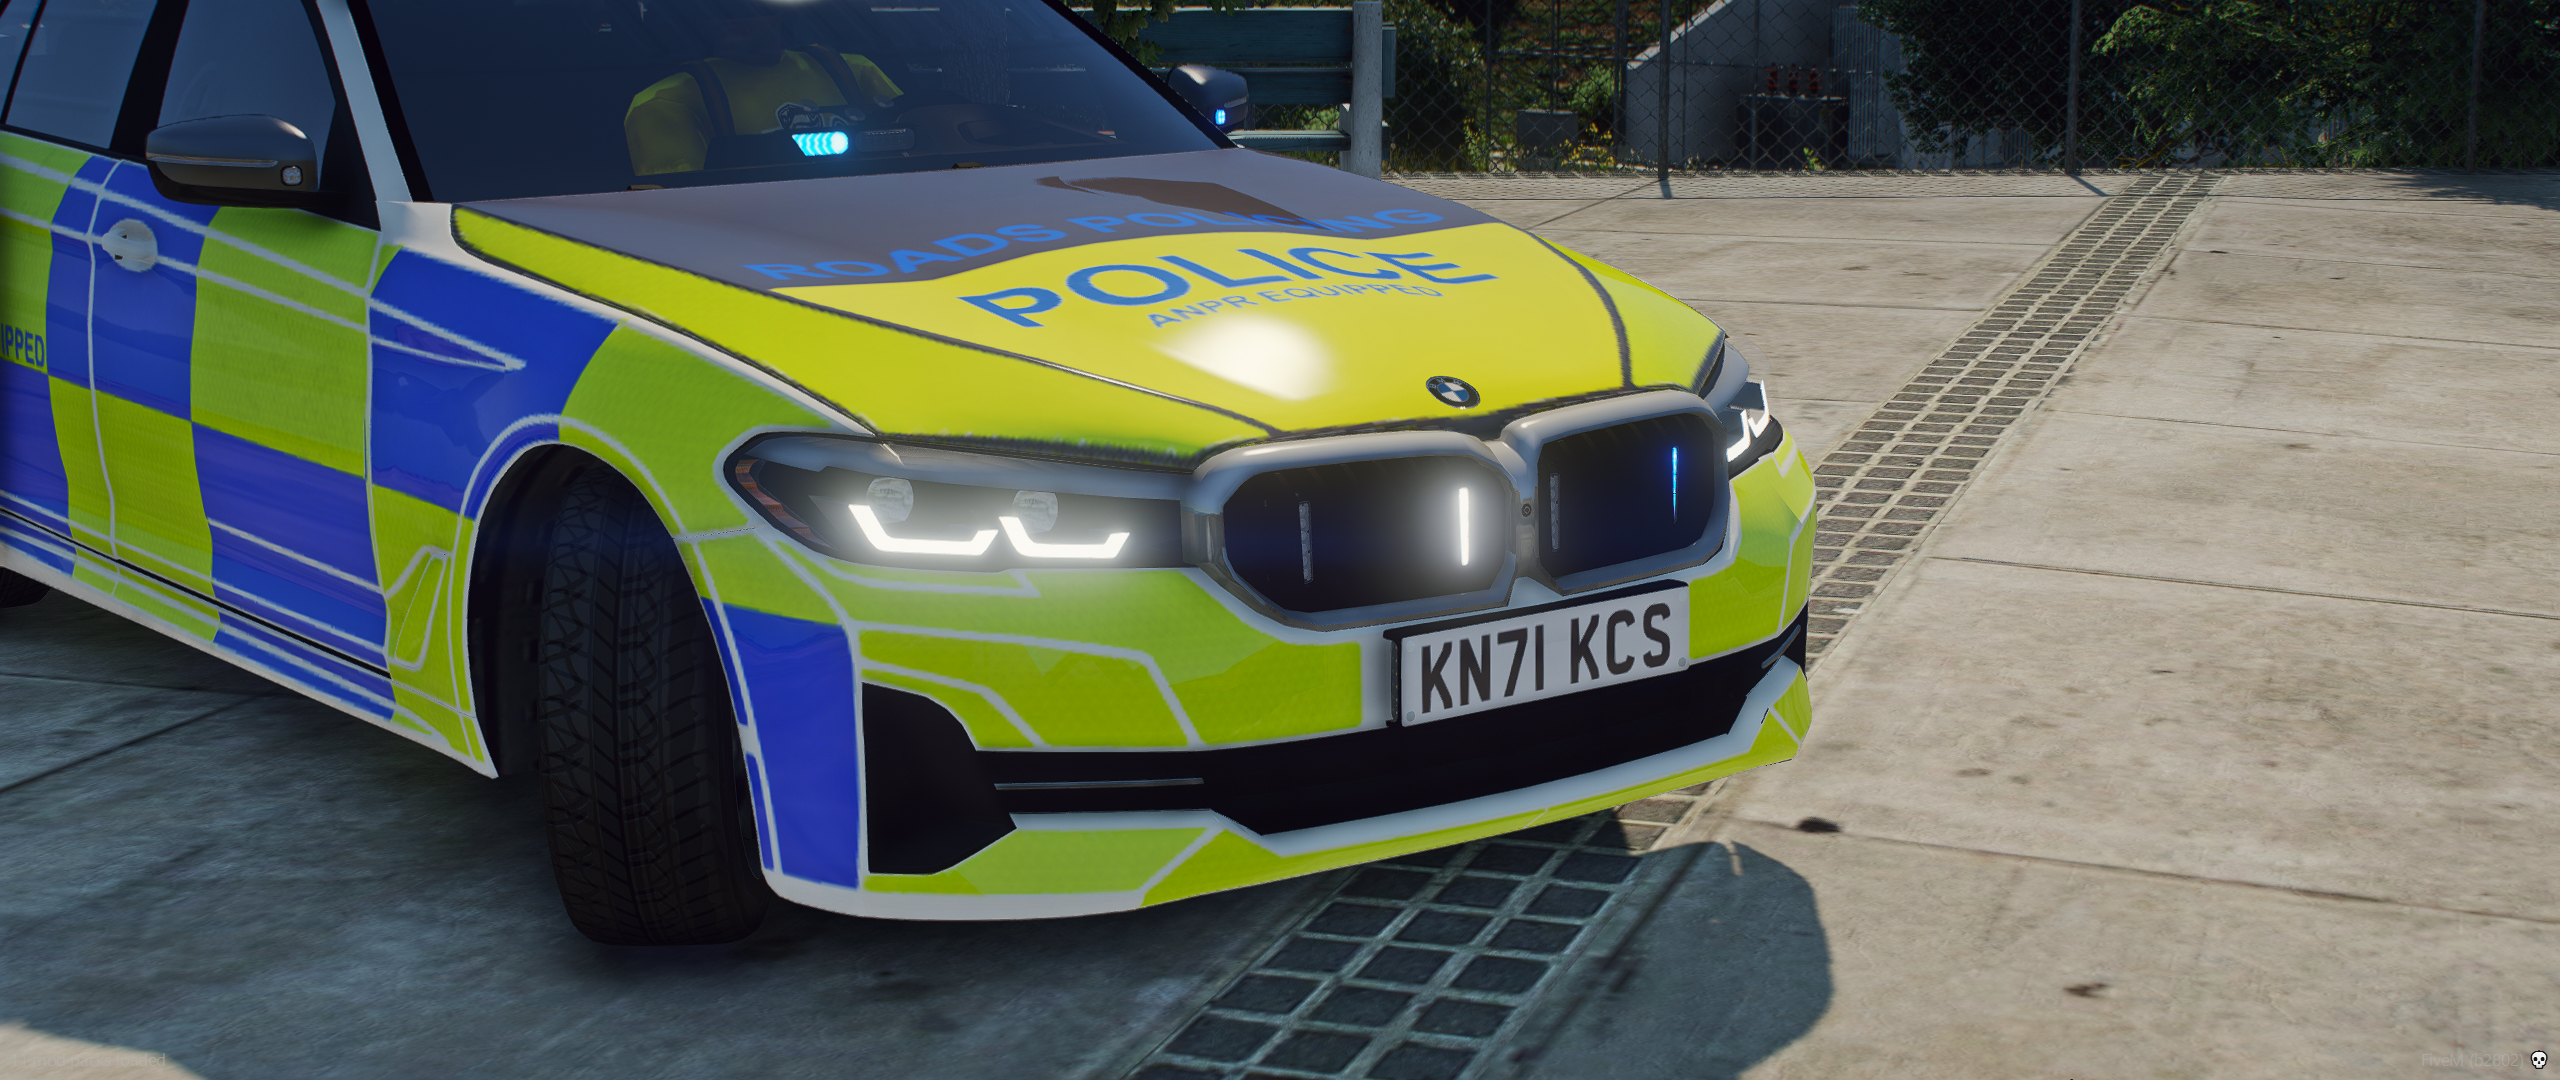 2021 BMW 530d G31 (Police)